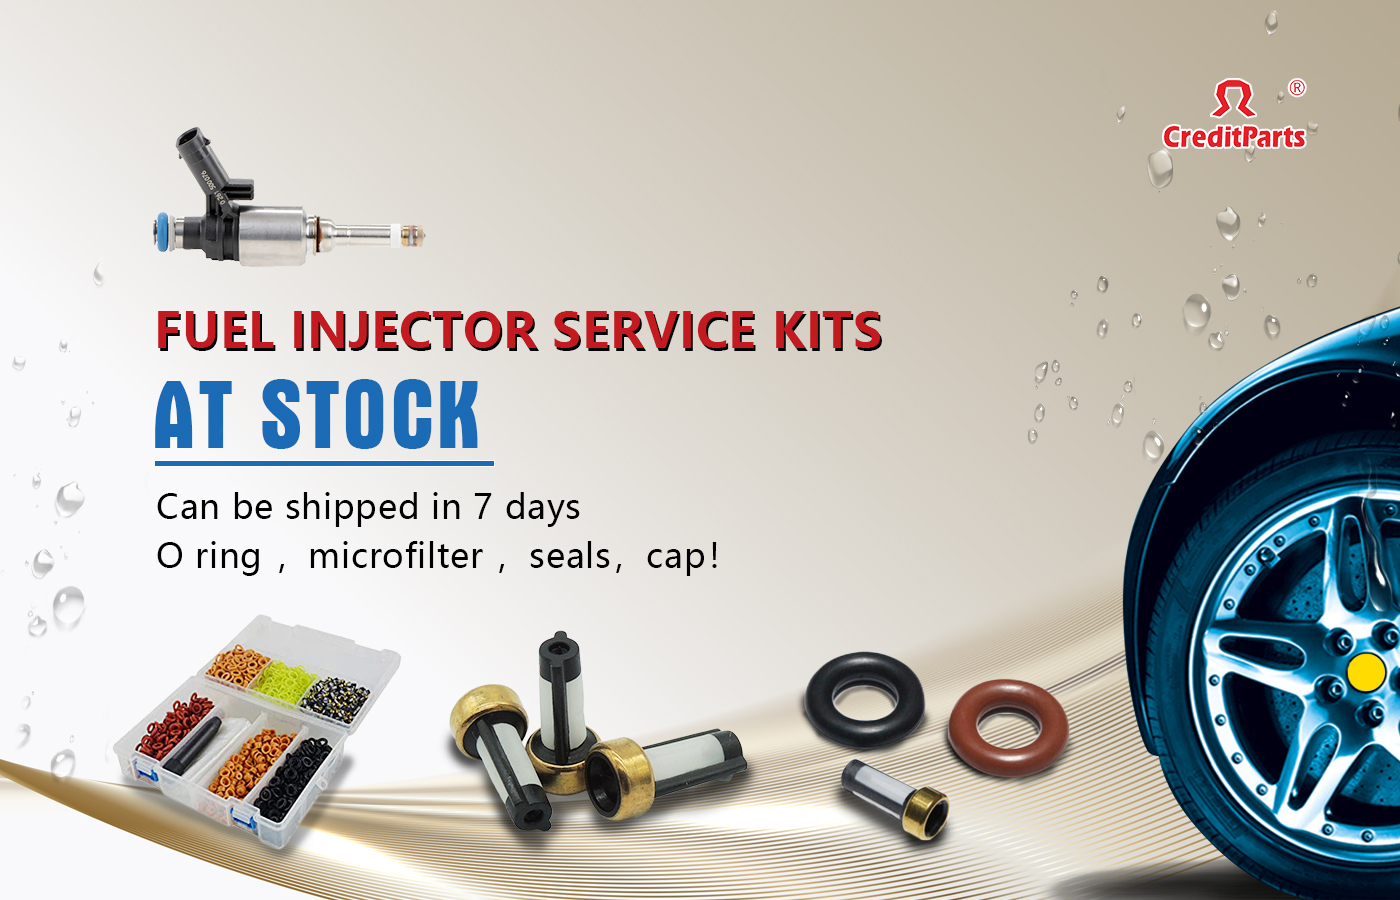 CreditParts Fuel Injector Service kits At stock 